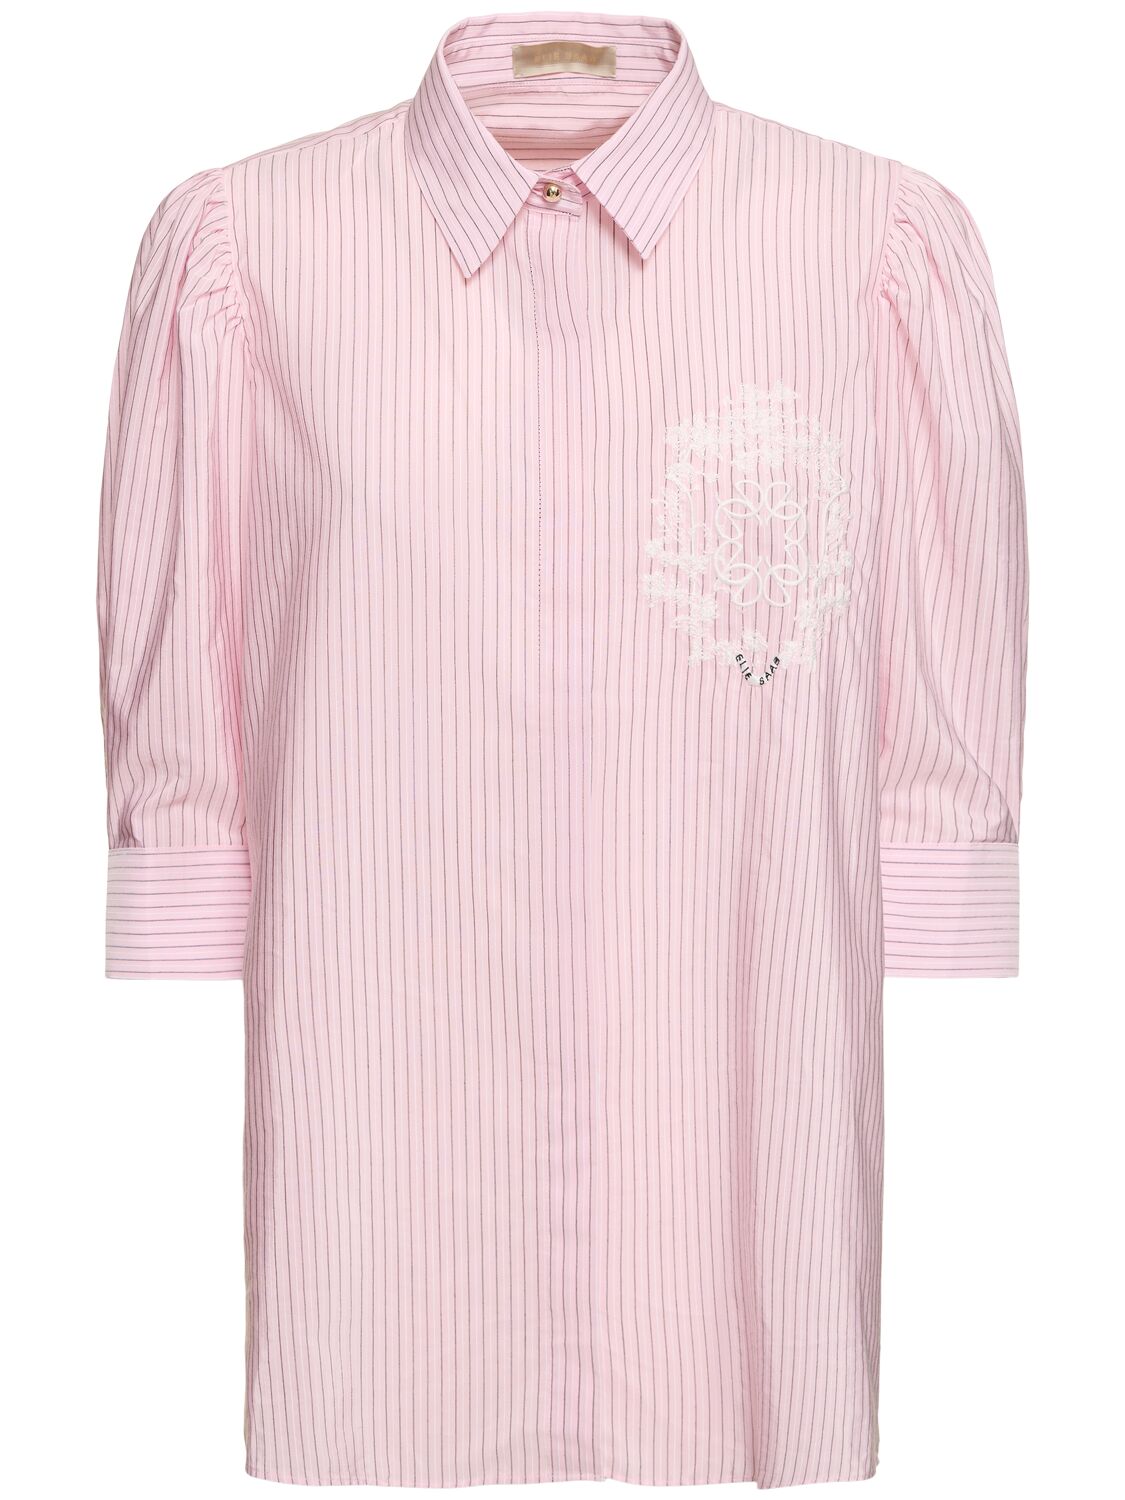 Elie Saab 条纹府绸衬衫 In White,pink